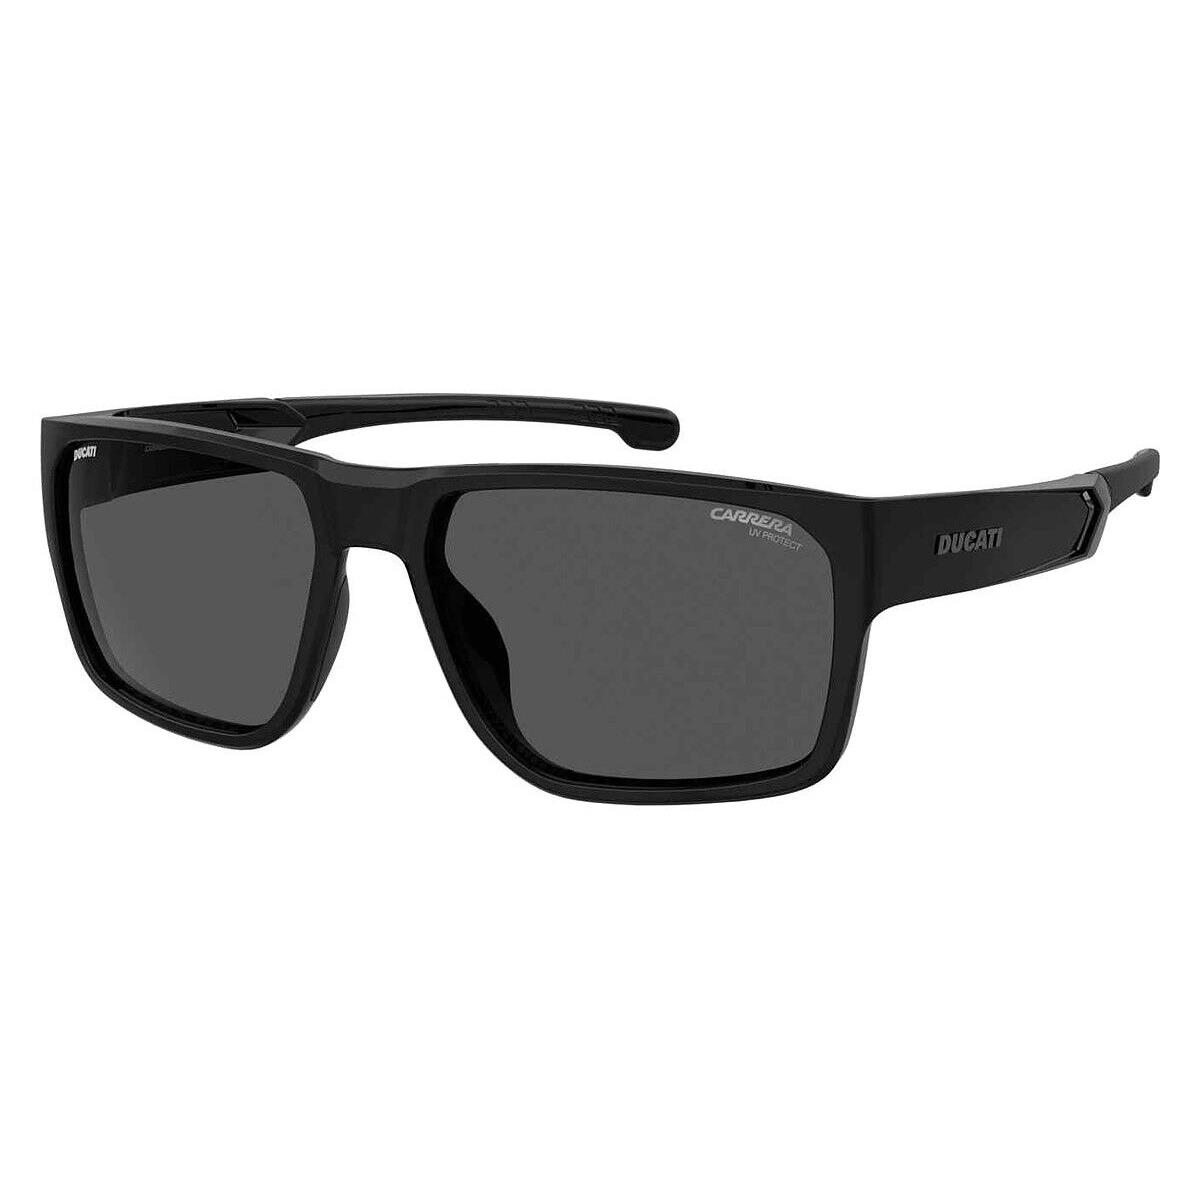 Carrera Carduc 029/S Sunglasses Men Black 59mm - Frame: Black, Lens: Gray